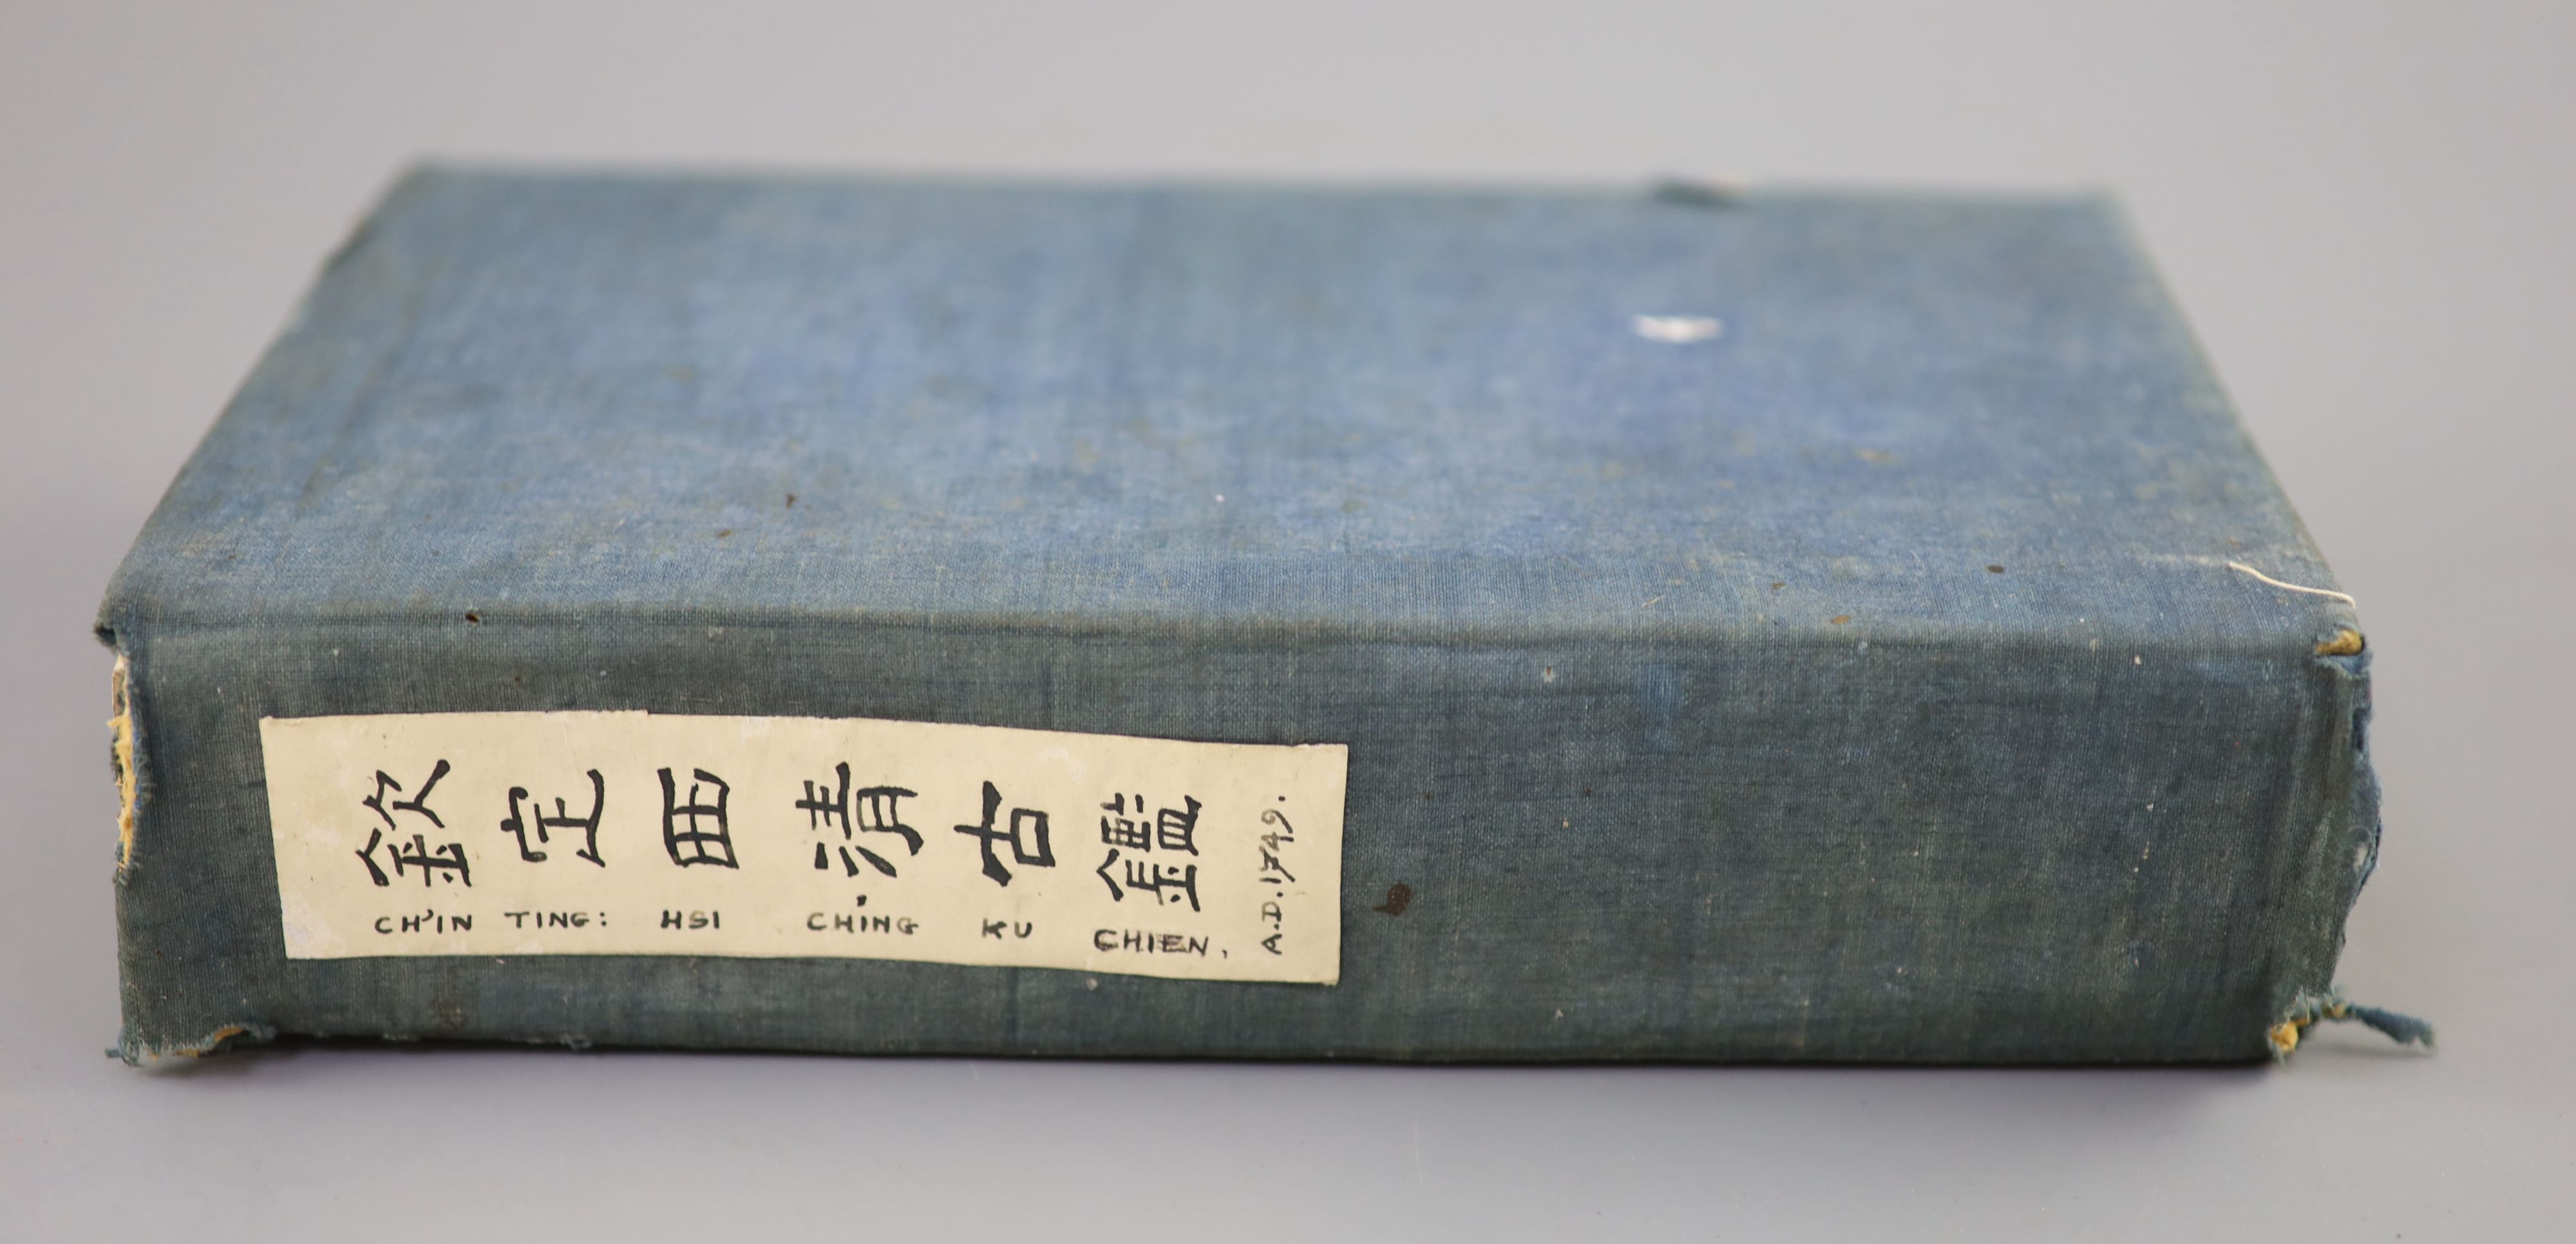 Rare Chinese book, Qinding Xiqing gujian. [Catalogue of the Xiqing antiquities], published 14th year of the reign of Qianlong 1749, Pro